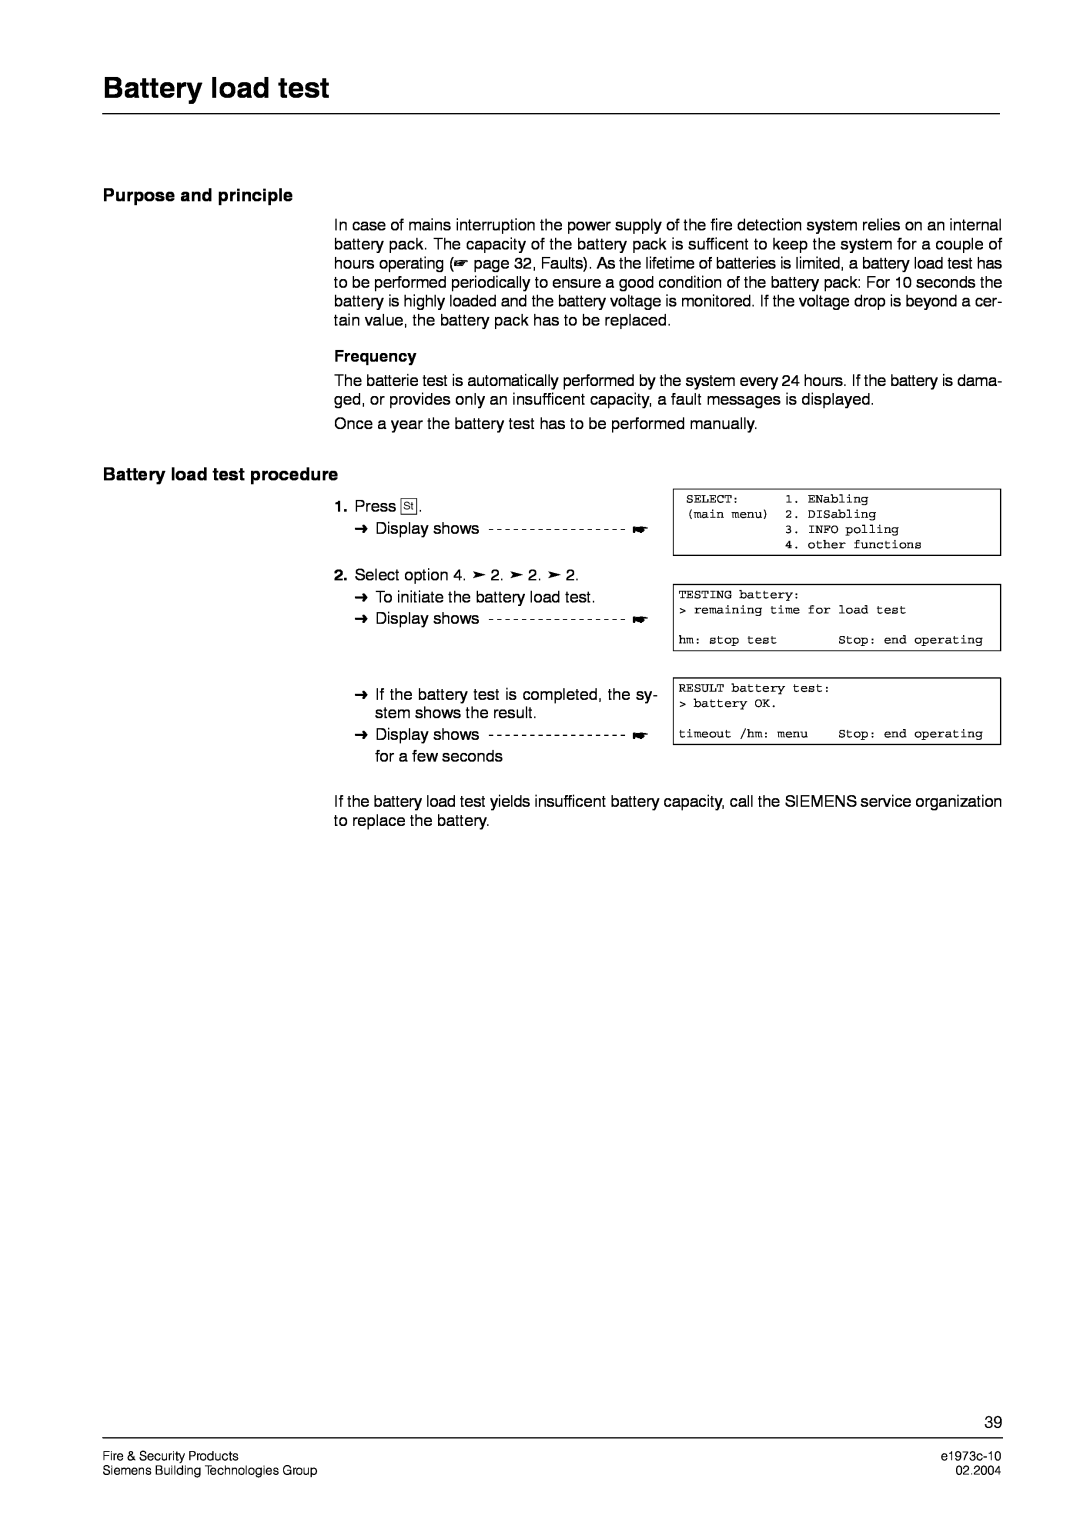 Siemens FC330A manual Purpose and principle, Battery load test procedure 